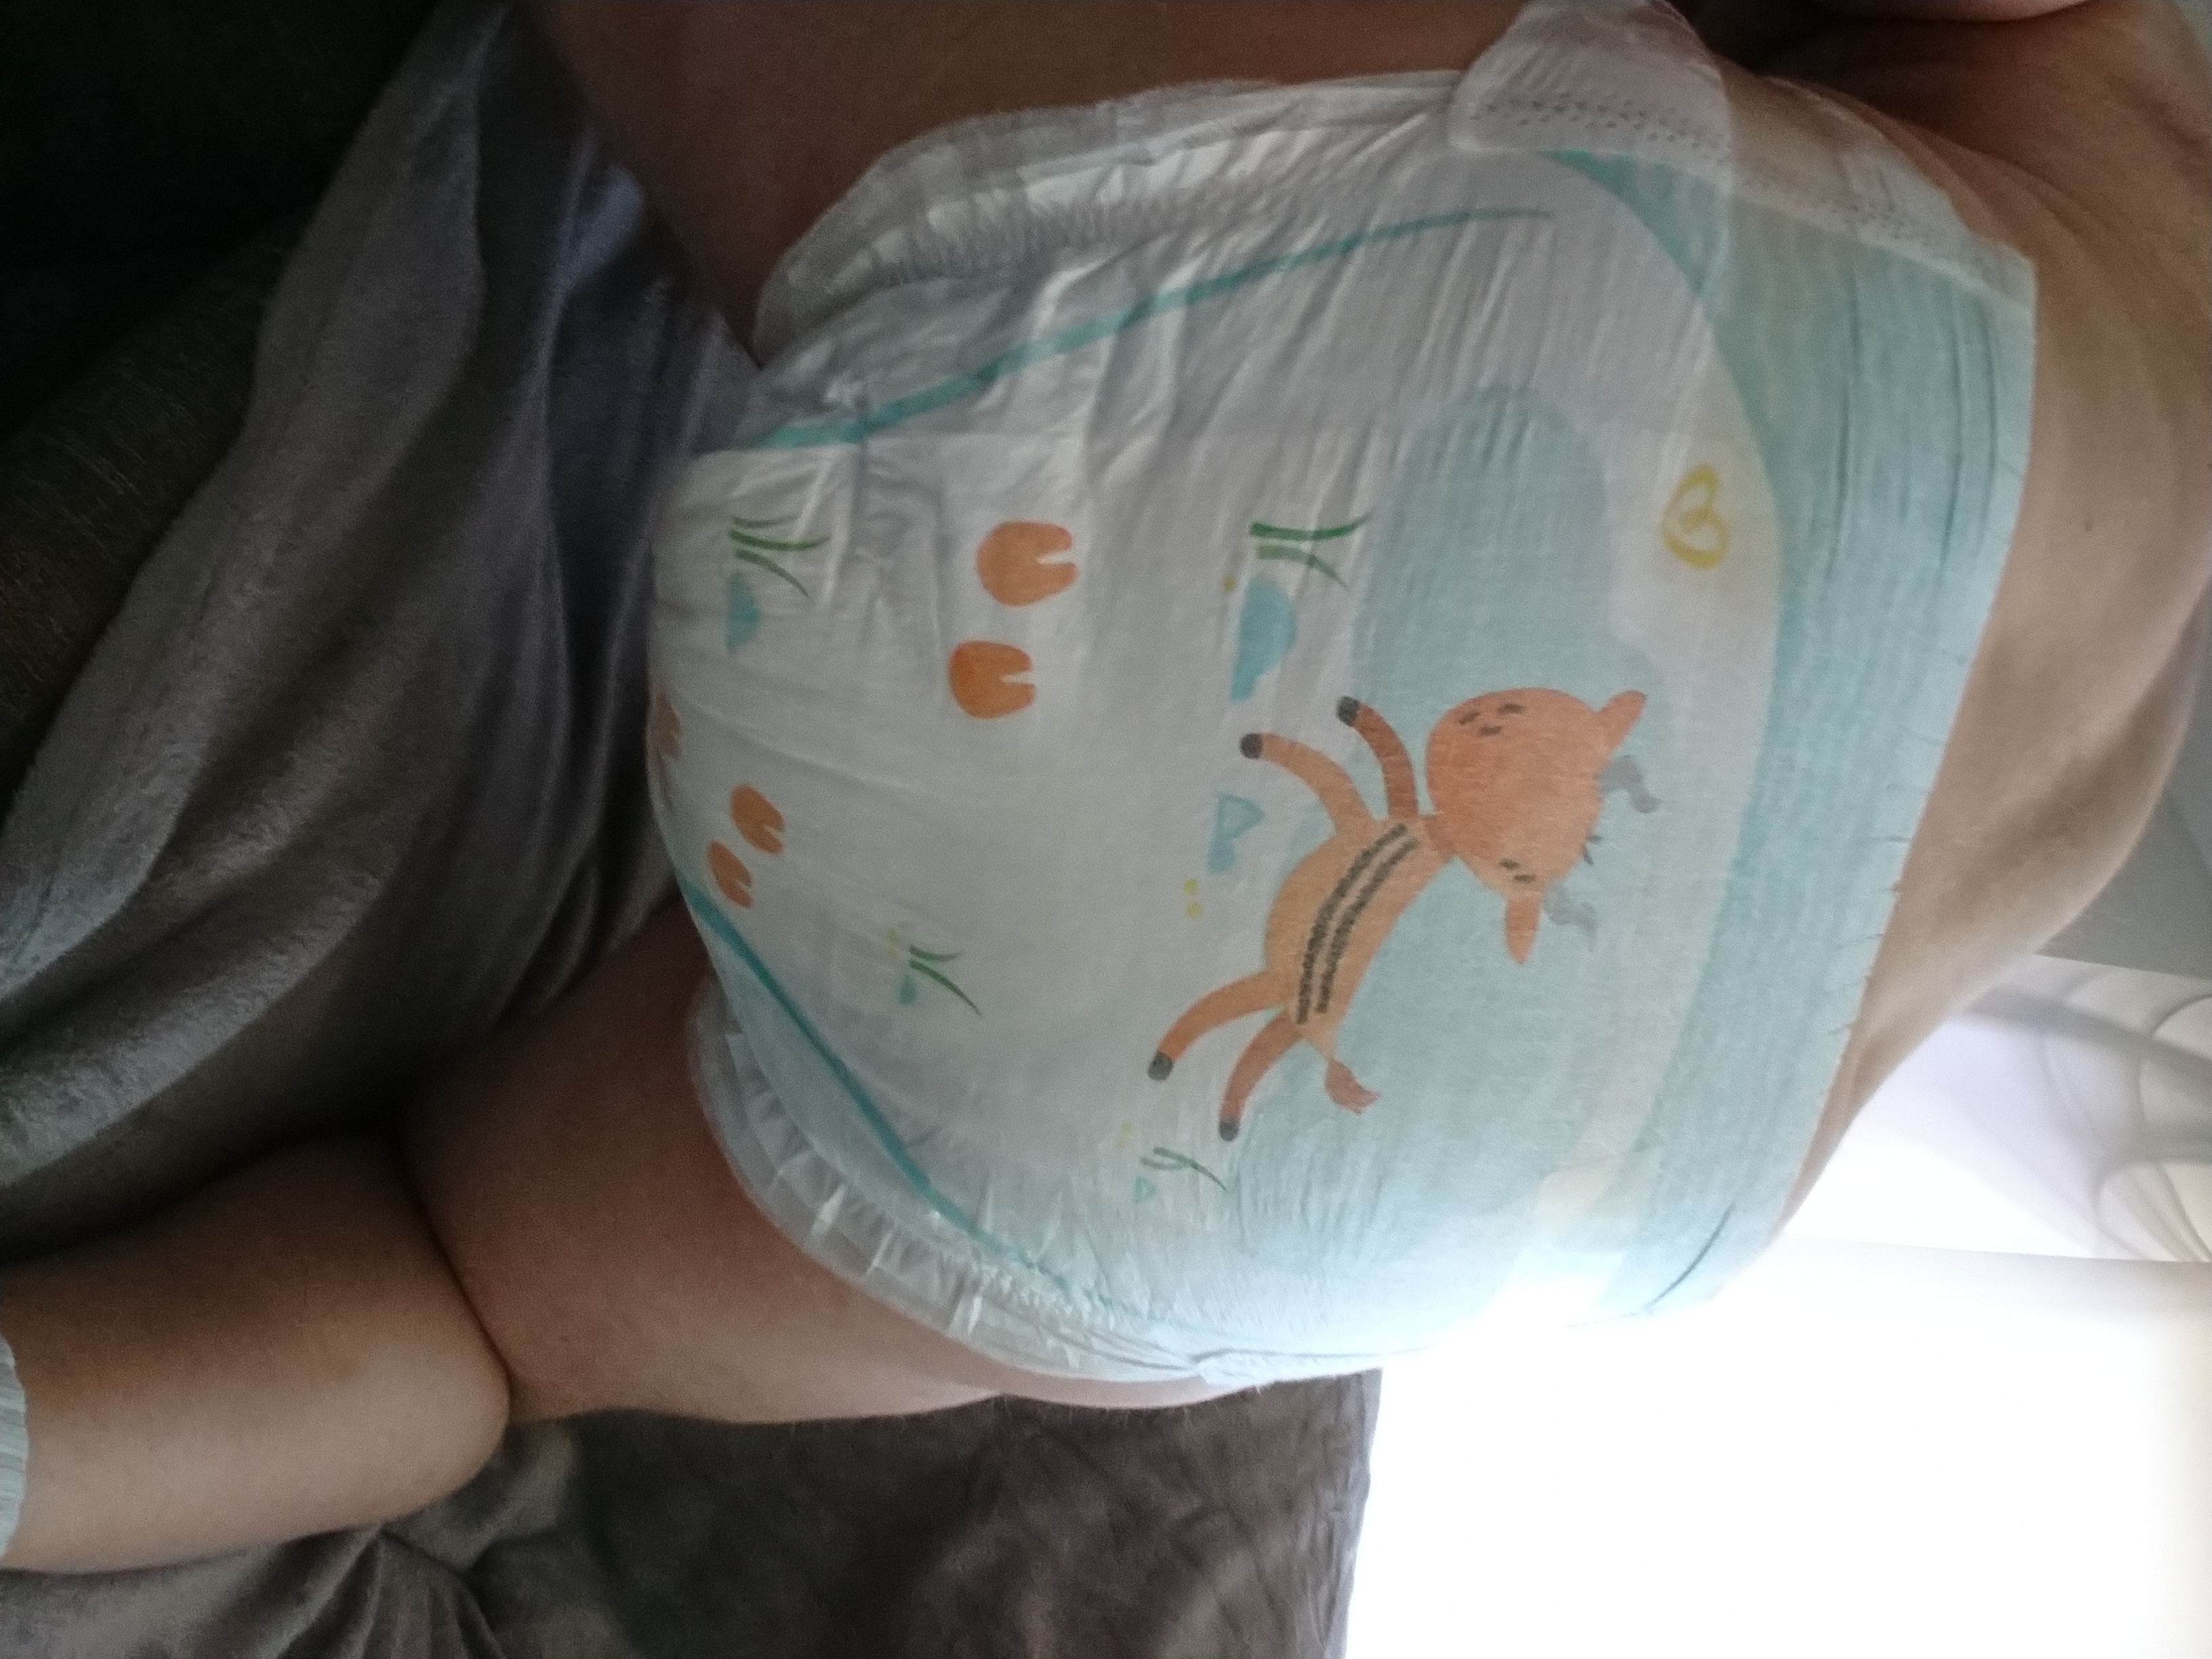 Big (mess) poop in my baby diaper